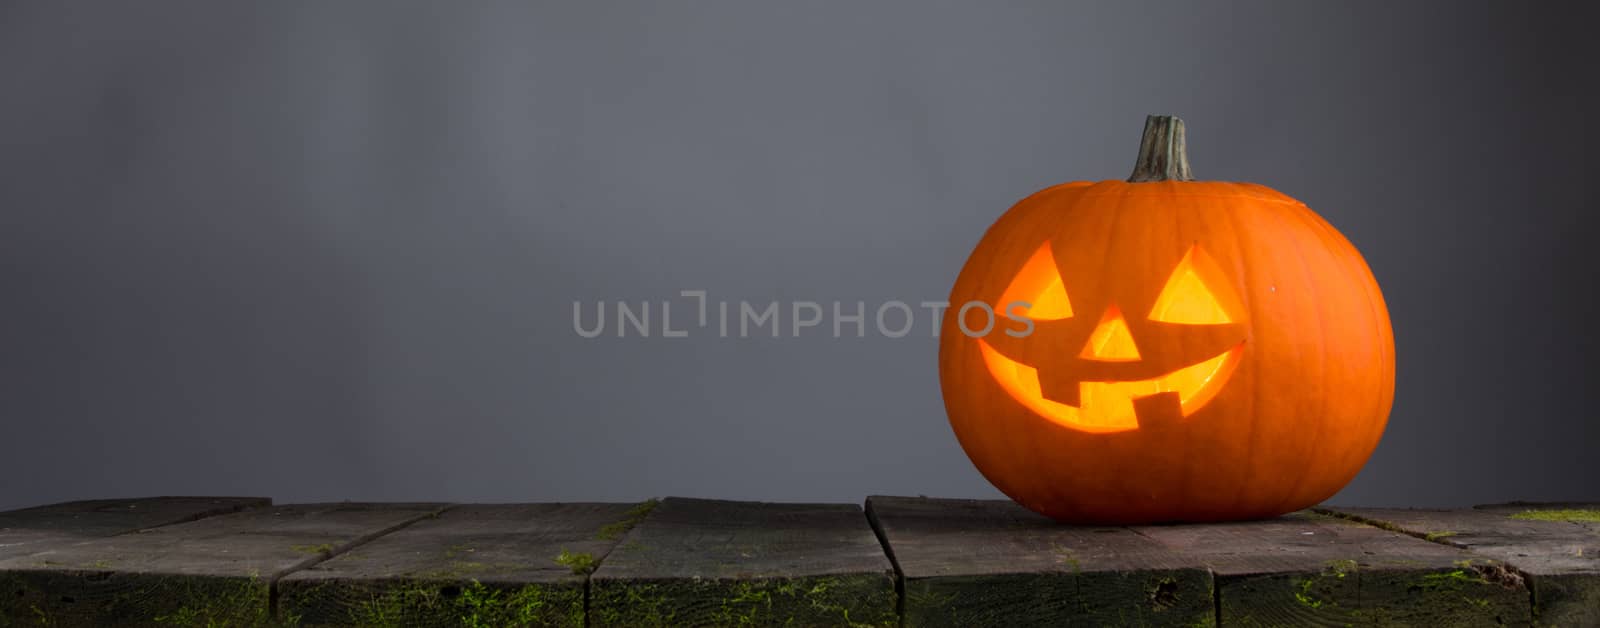 Glowing Halloween pumpkin head jack lantern on wooden table